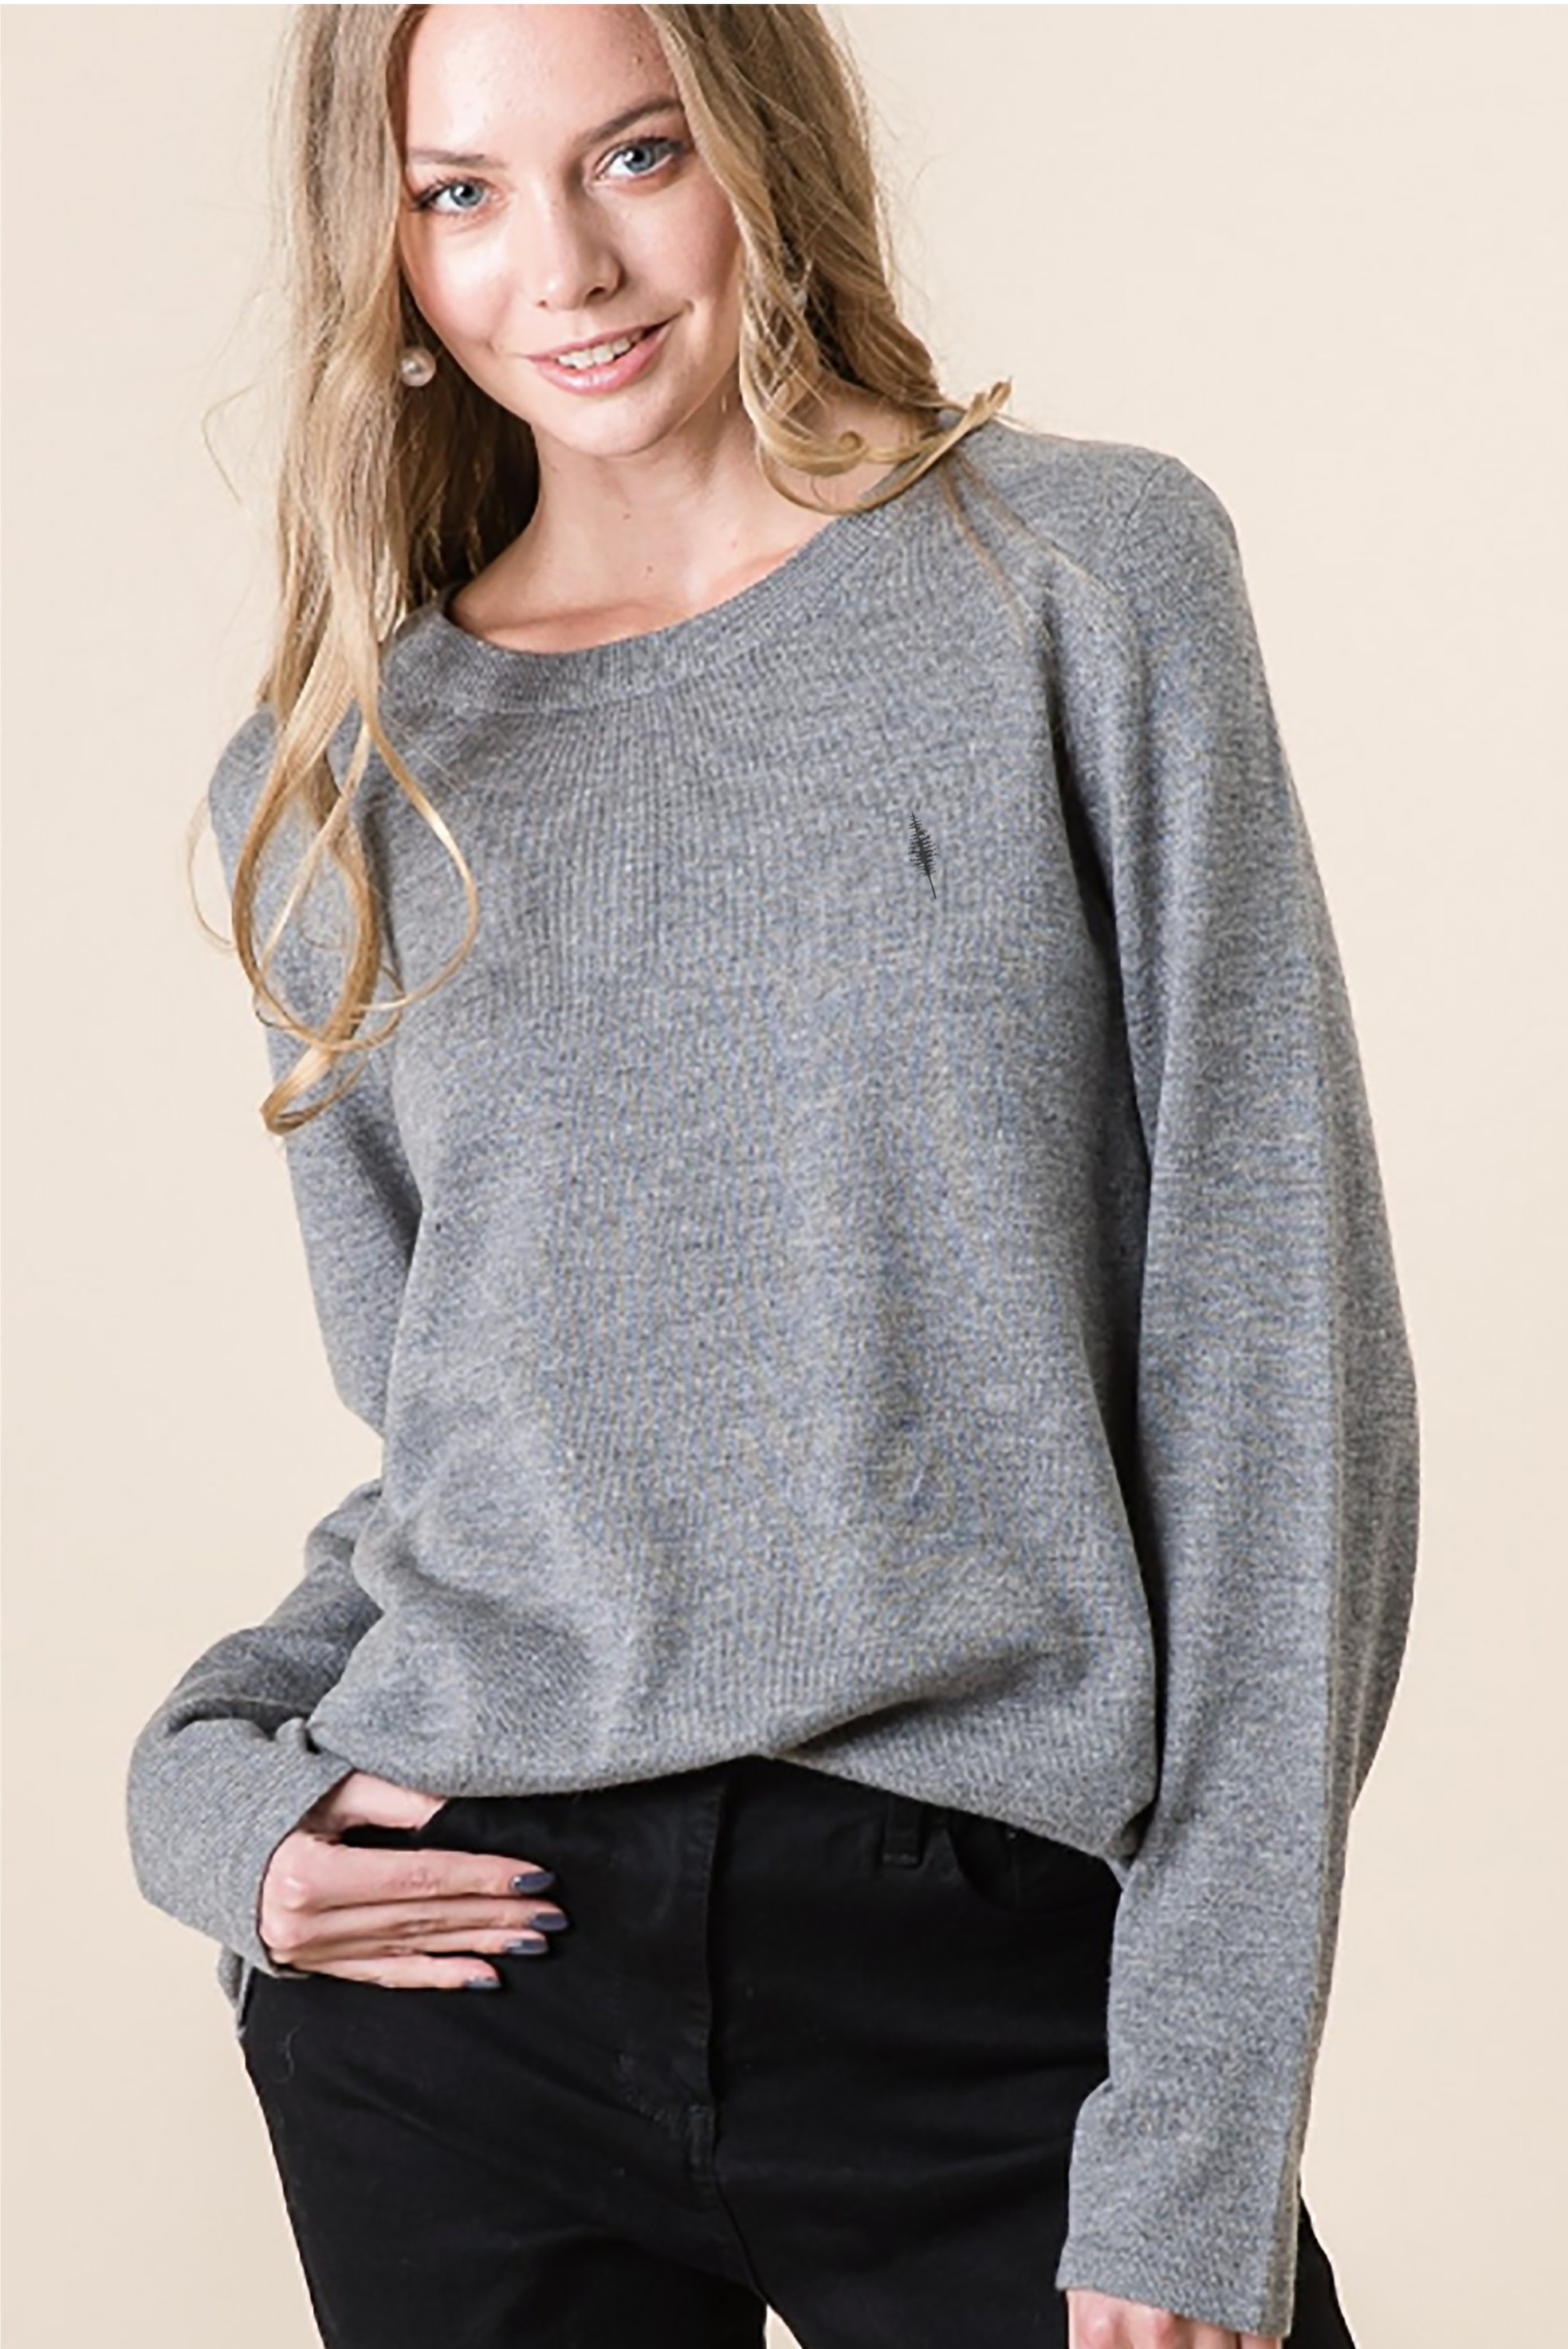 Women's round neck casual grey sweater